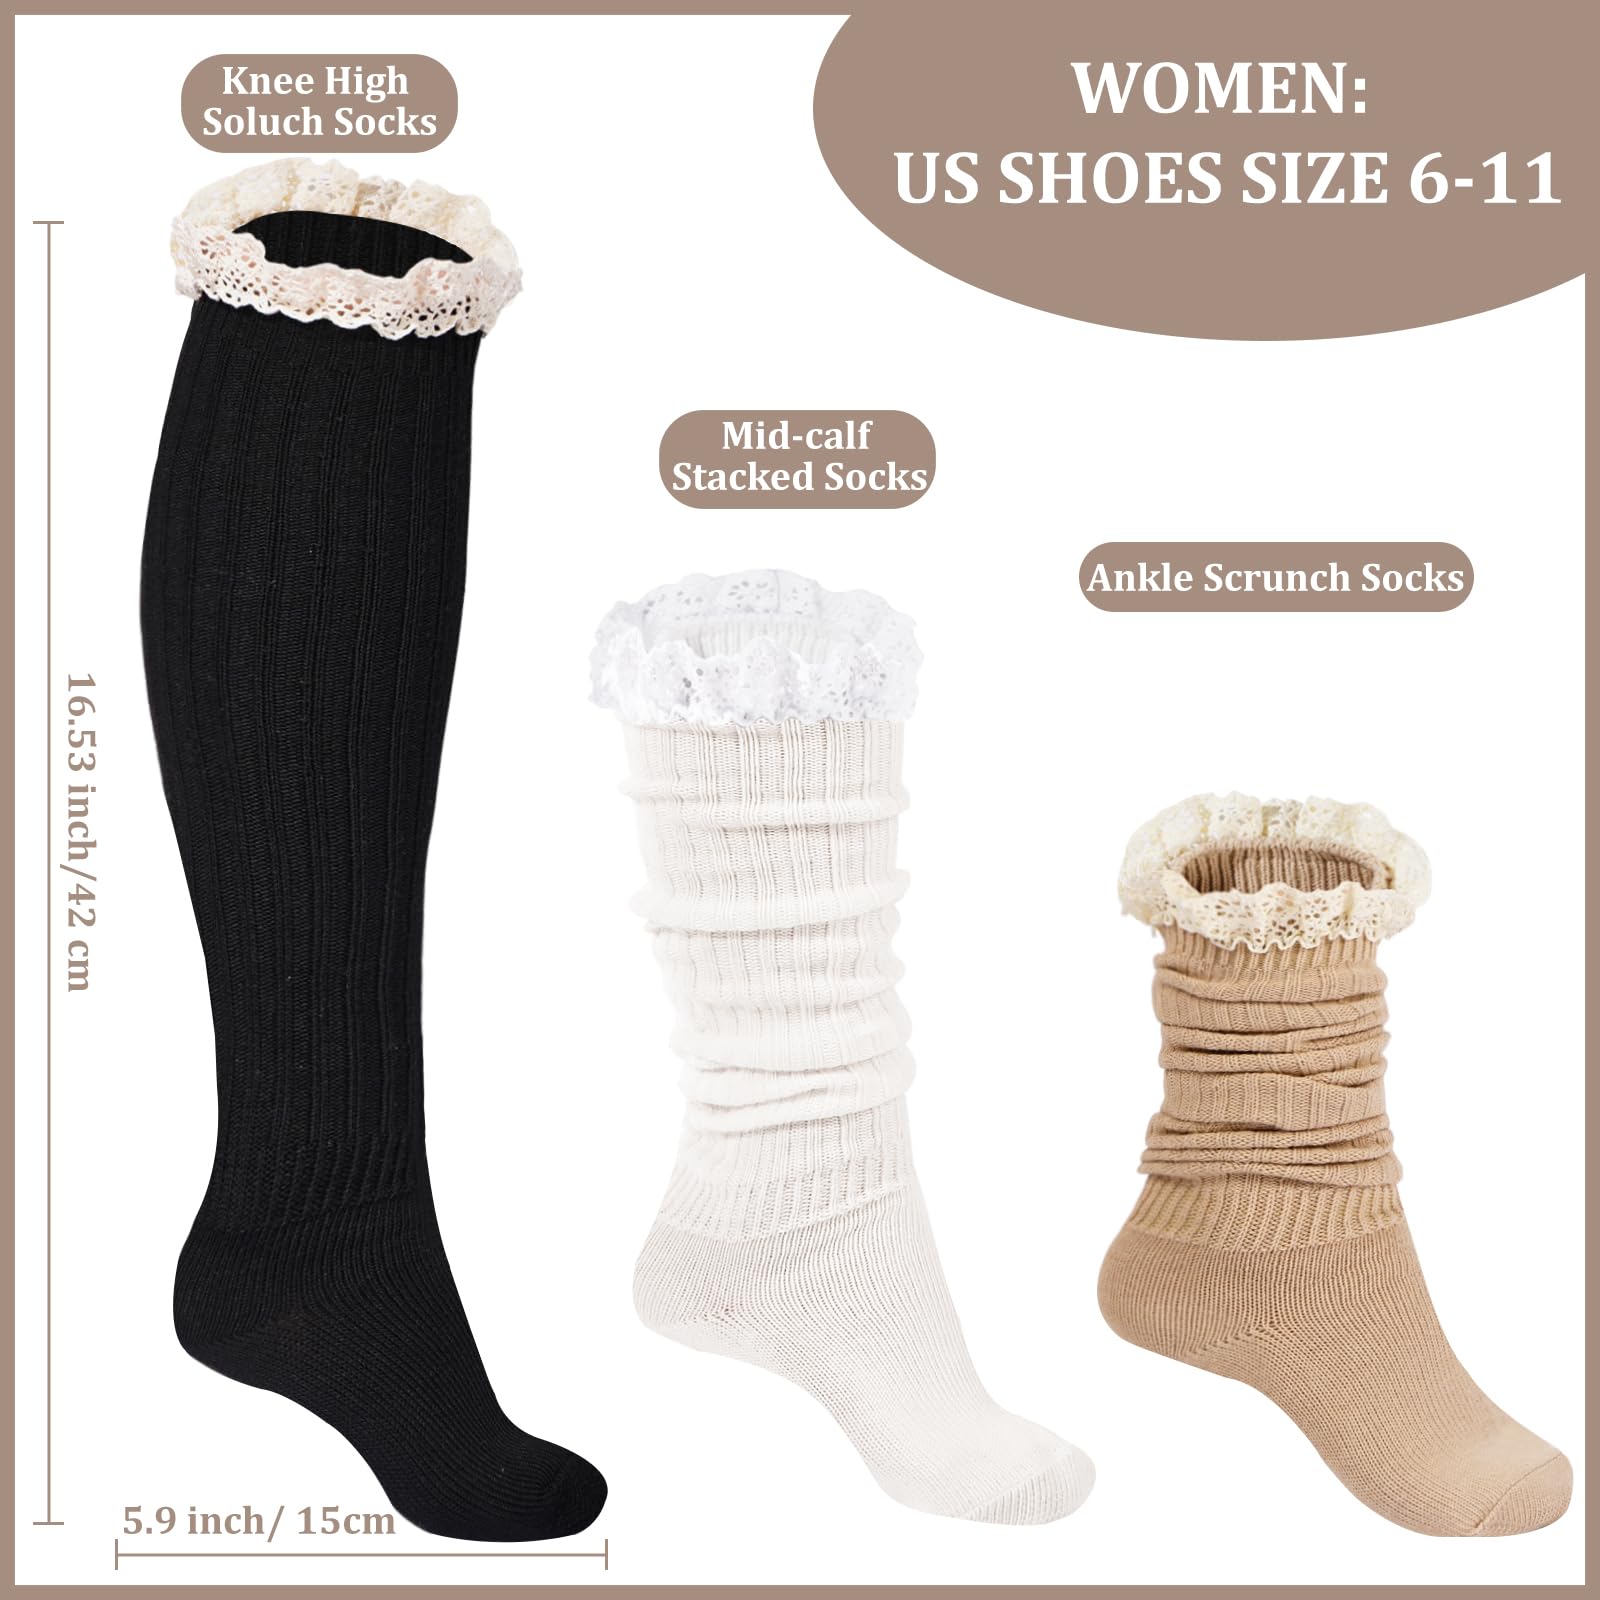 3 Pairs Knee High Slouch Socks for Women Ruffle-White - Moon Wood